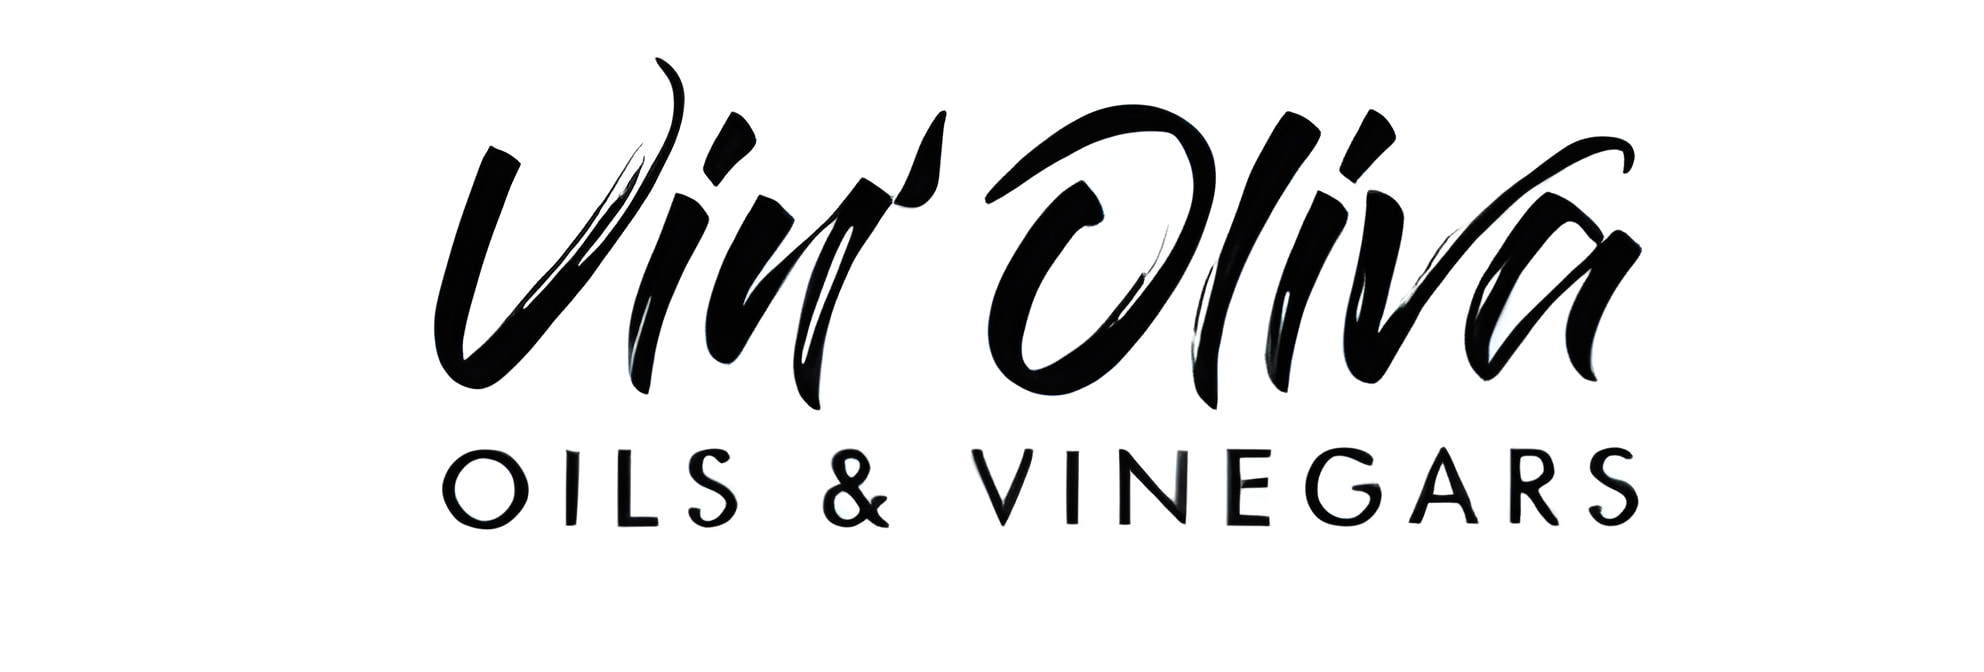 VinOlive logo